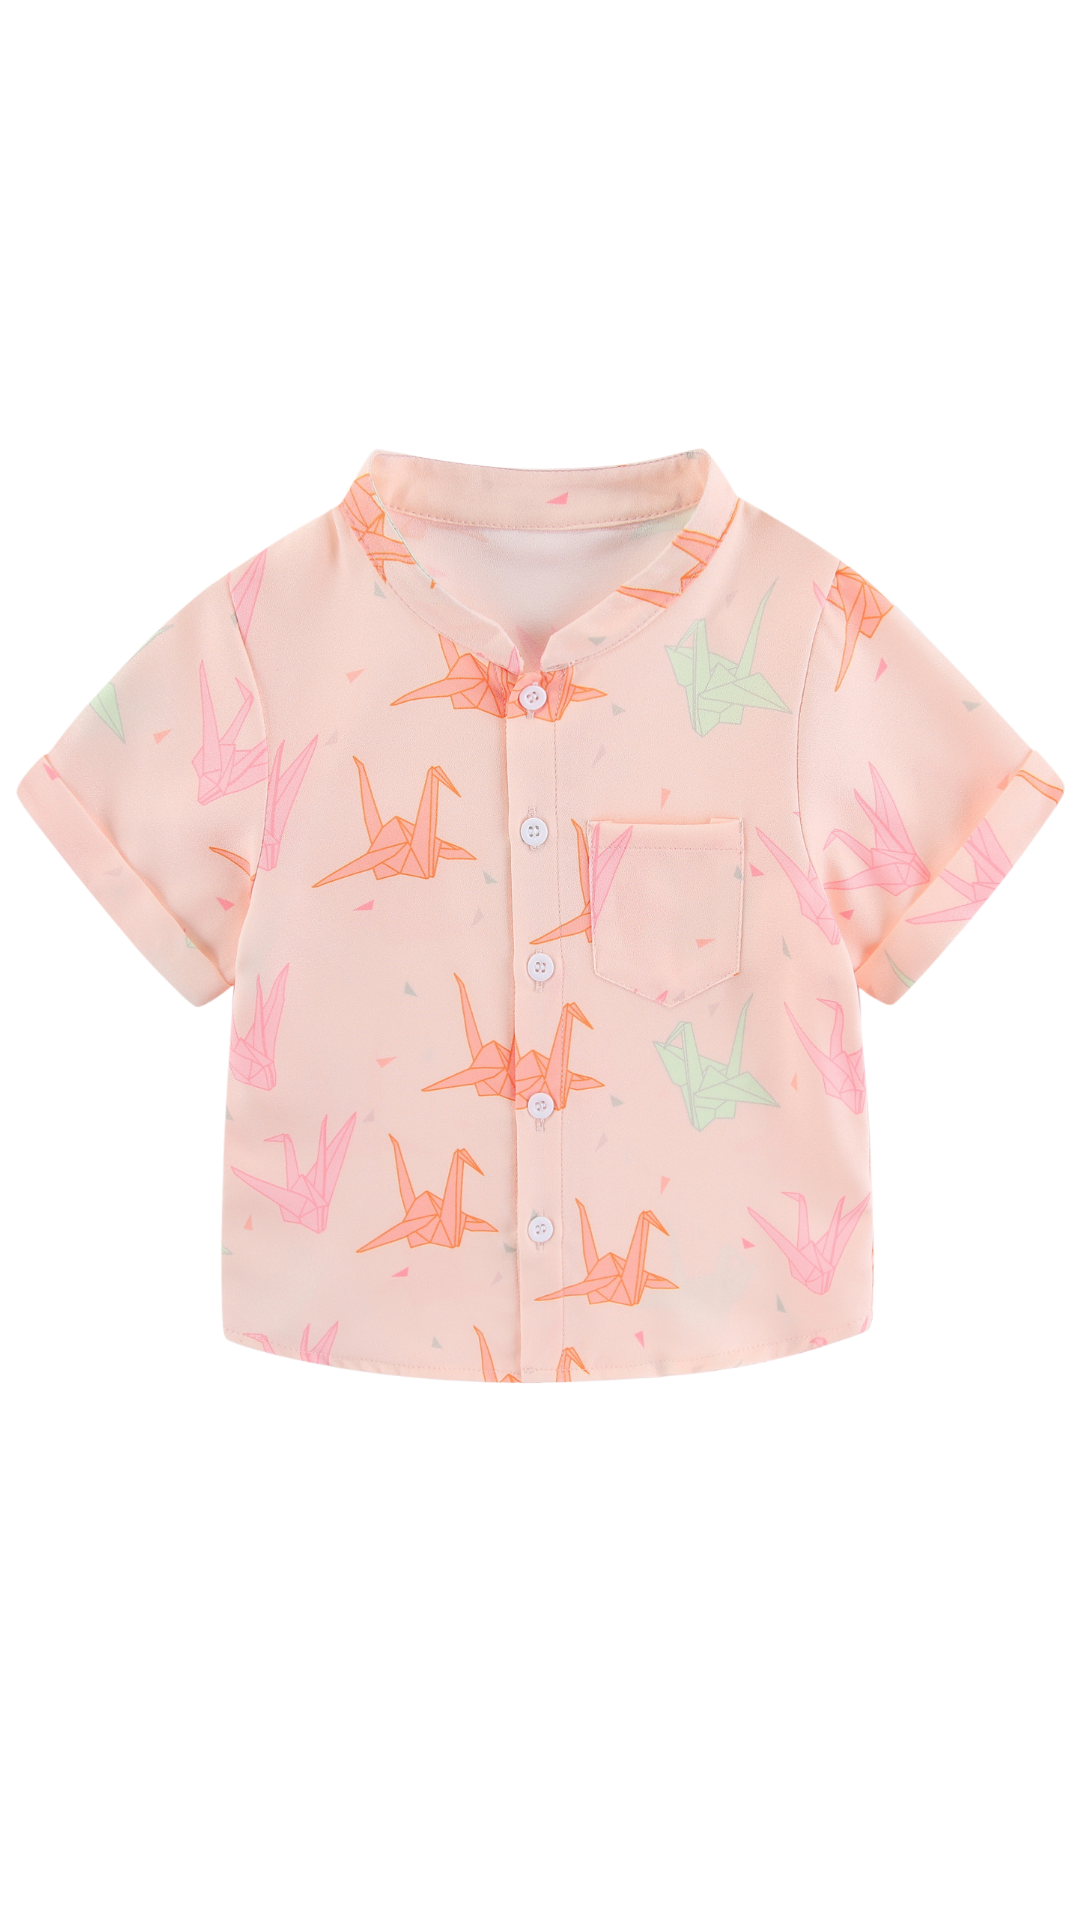 Boys Mandarin Collar Shirt Blessing Cranes